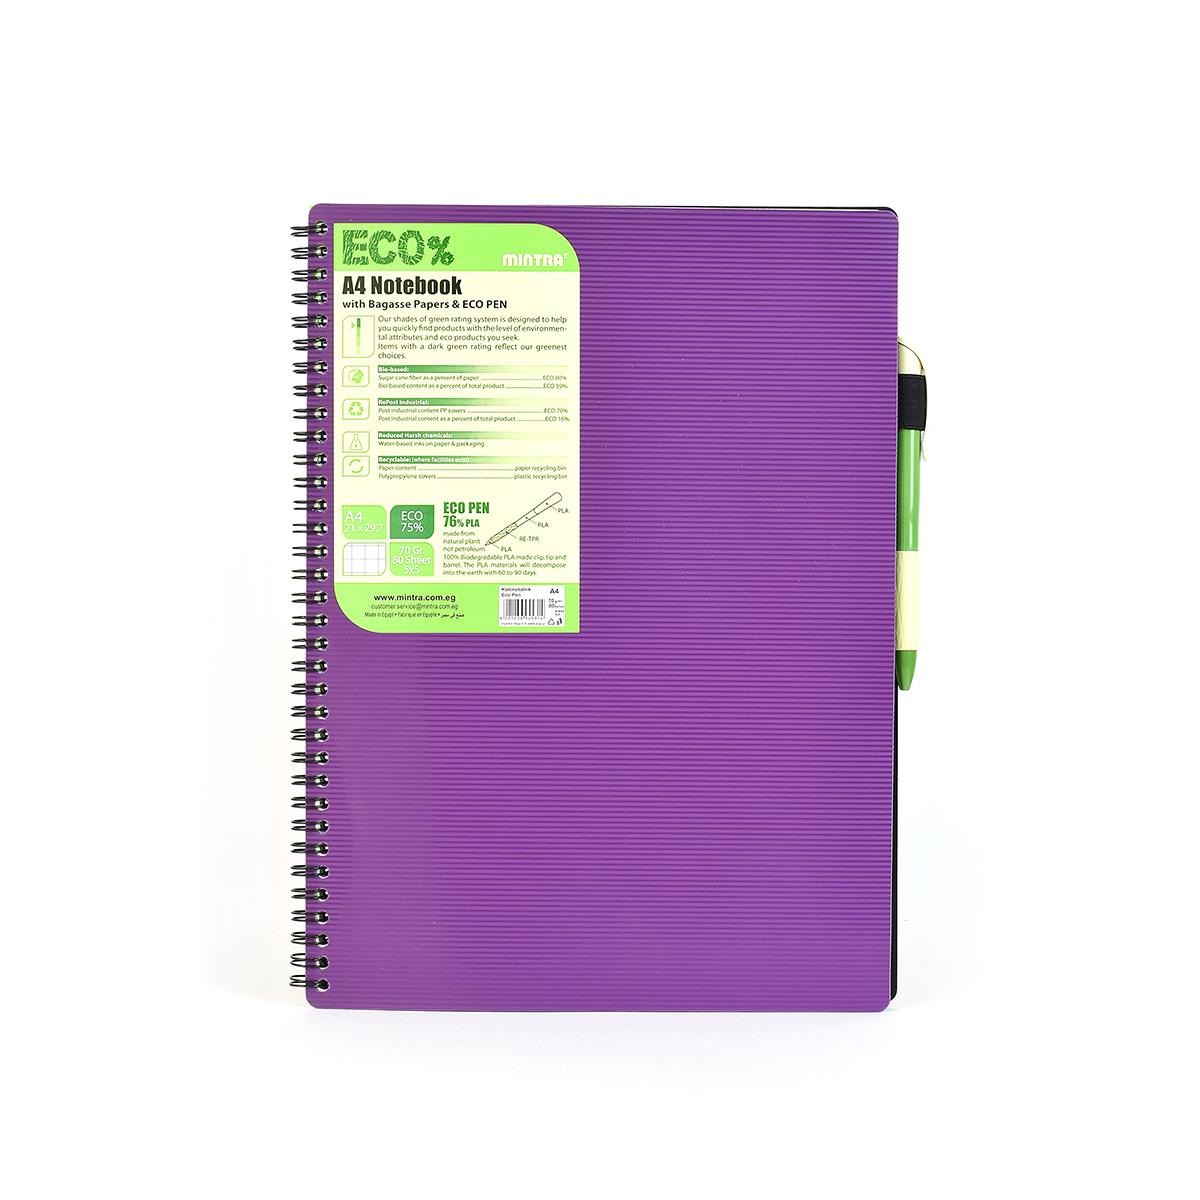 Notebook ECO PEN